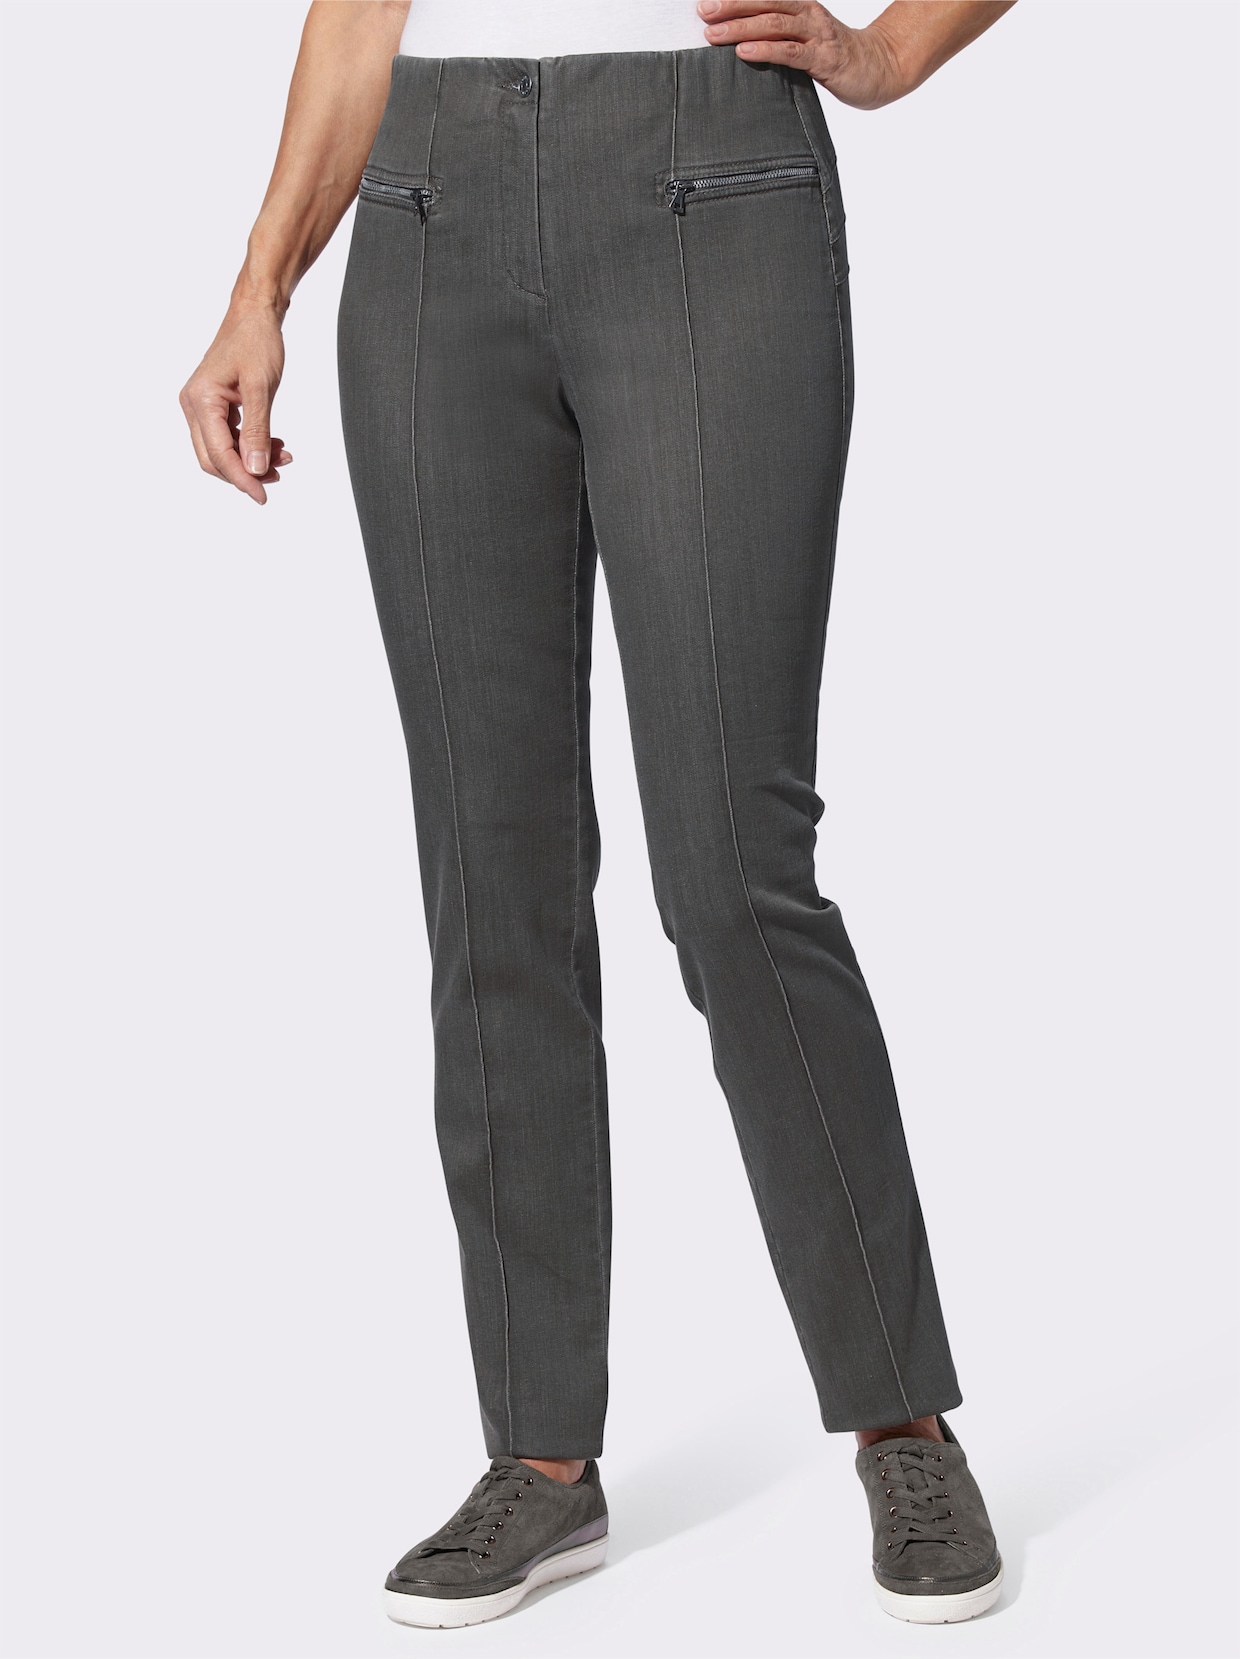 Cosma Jeans - grey-denim